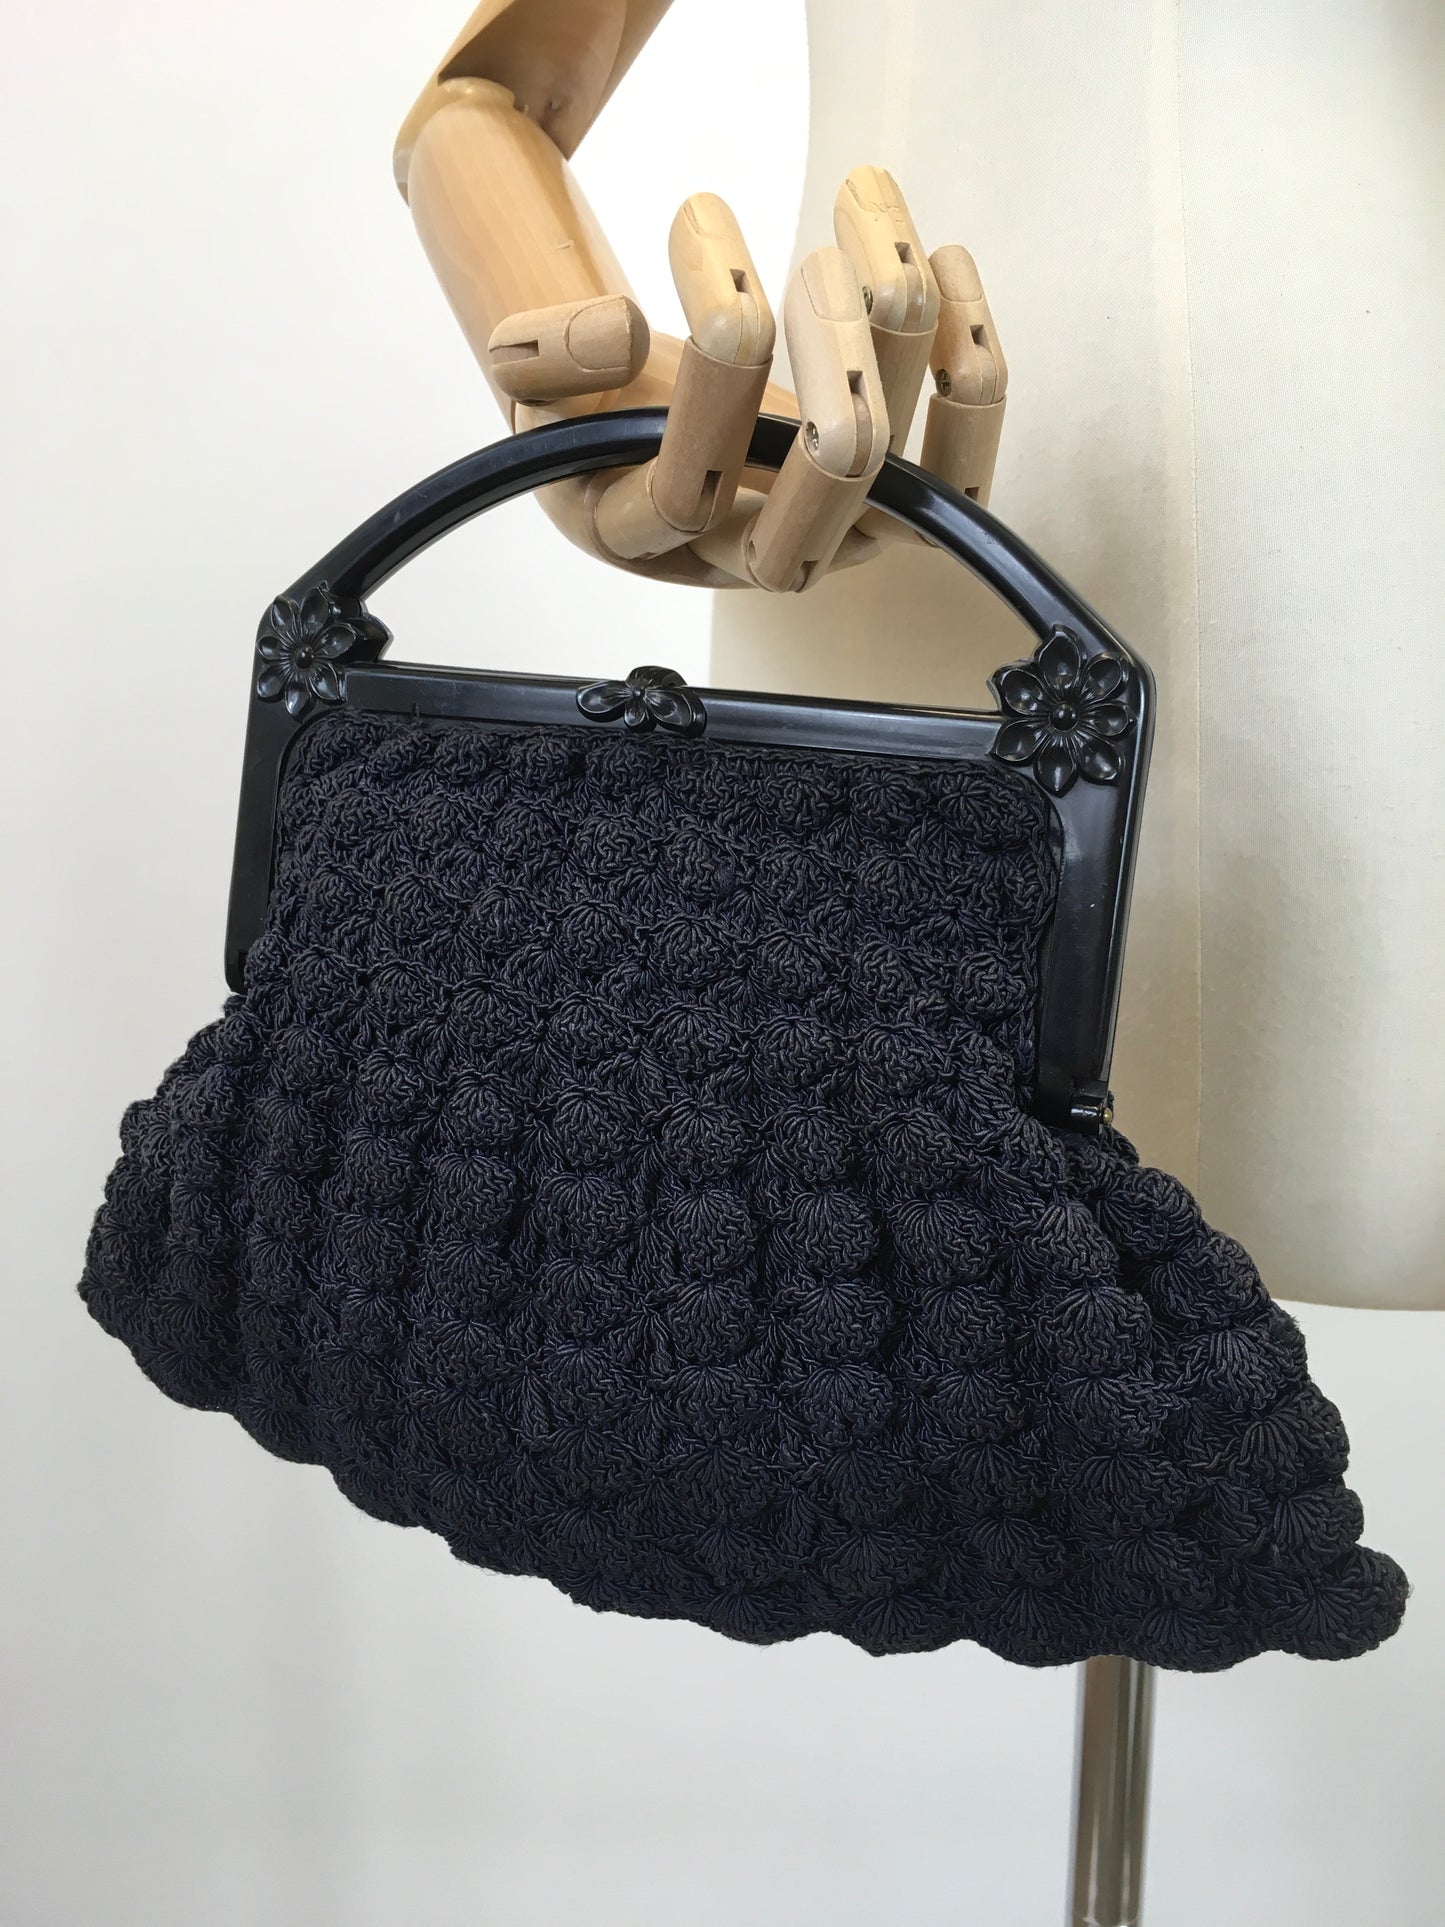 Original Stunning 1930's Popcorn Crochet Handbag - With Celluloid Embossed Handle in Navy